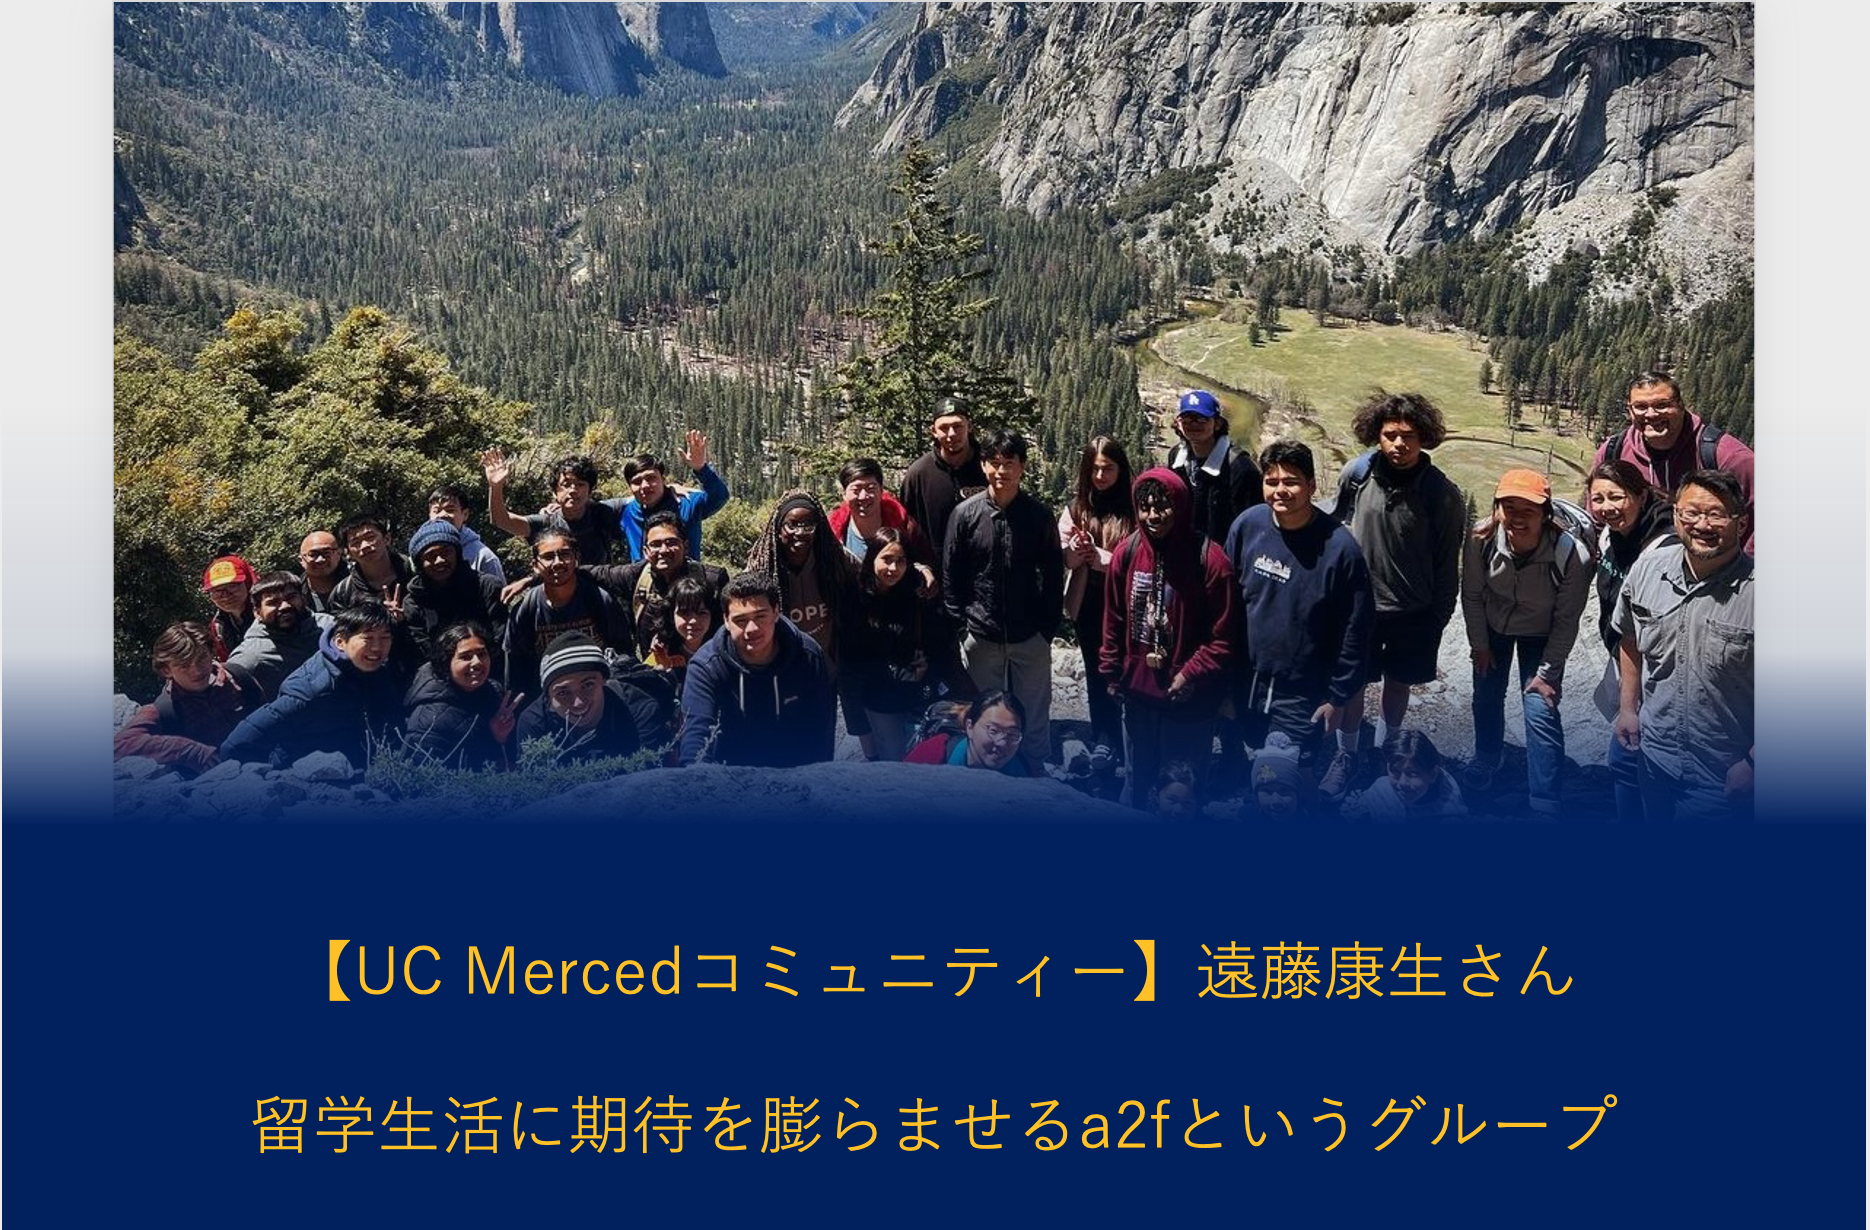 【UC Merced コミュニティー】留学生活に期待を膨らませるa2fというグループ